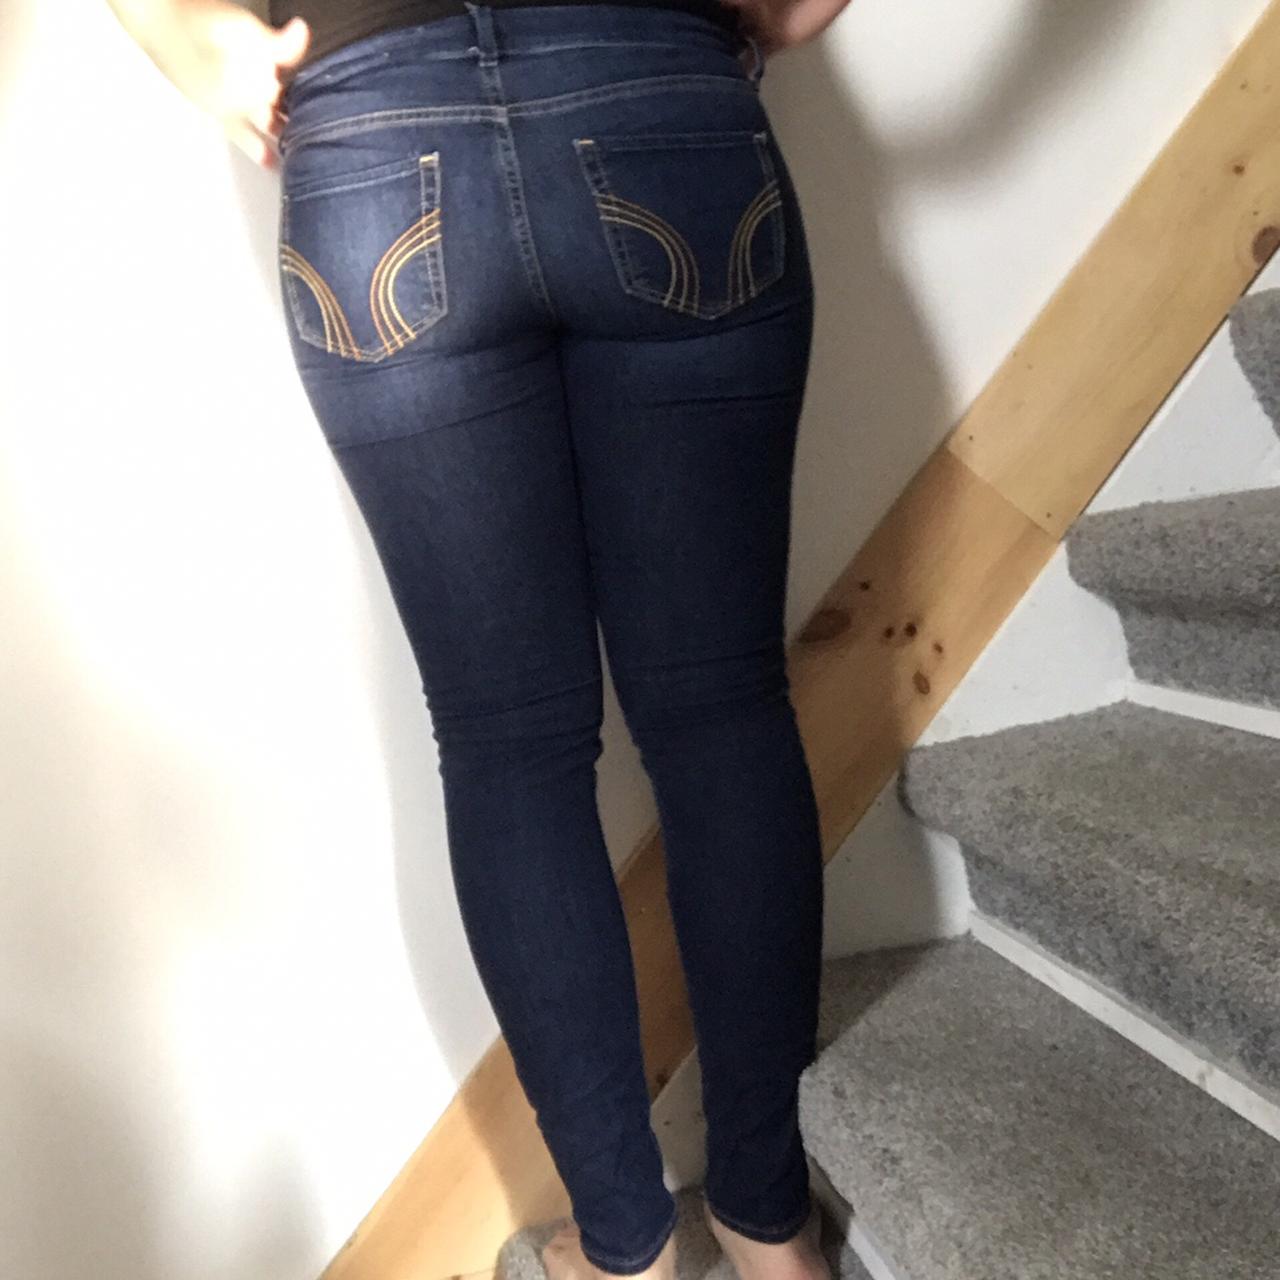 Hollister low rise jean leggings